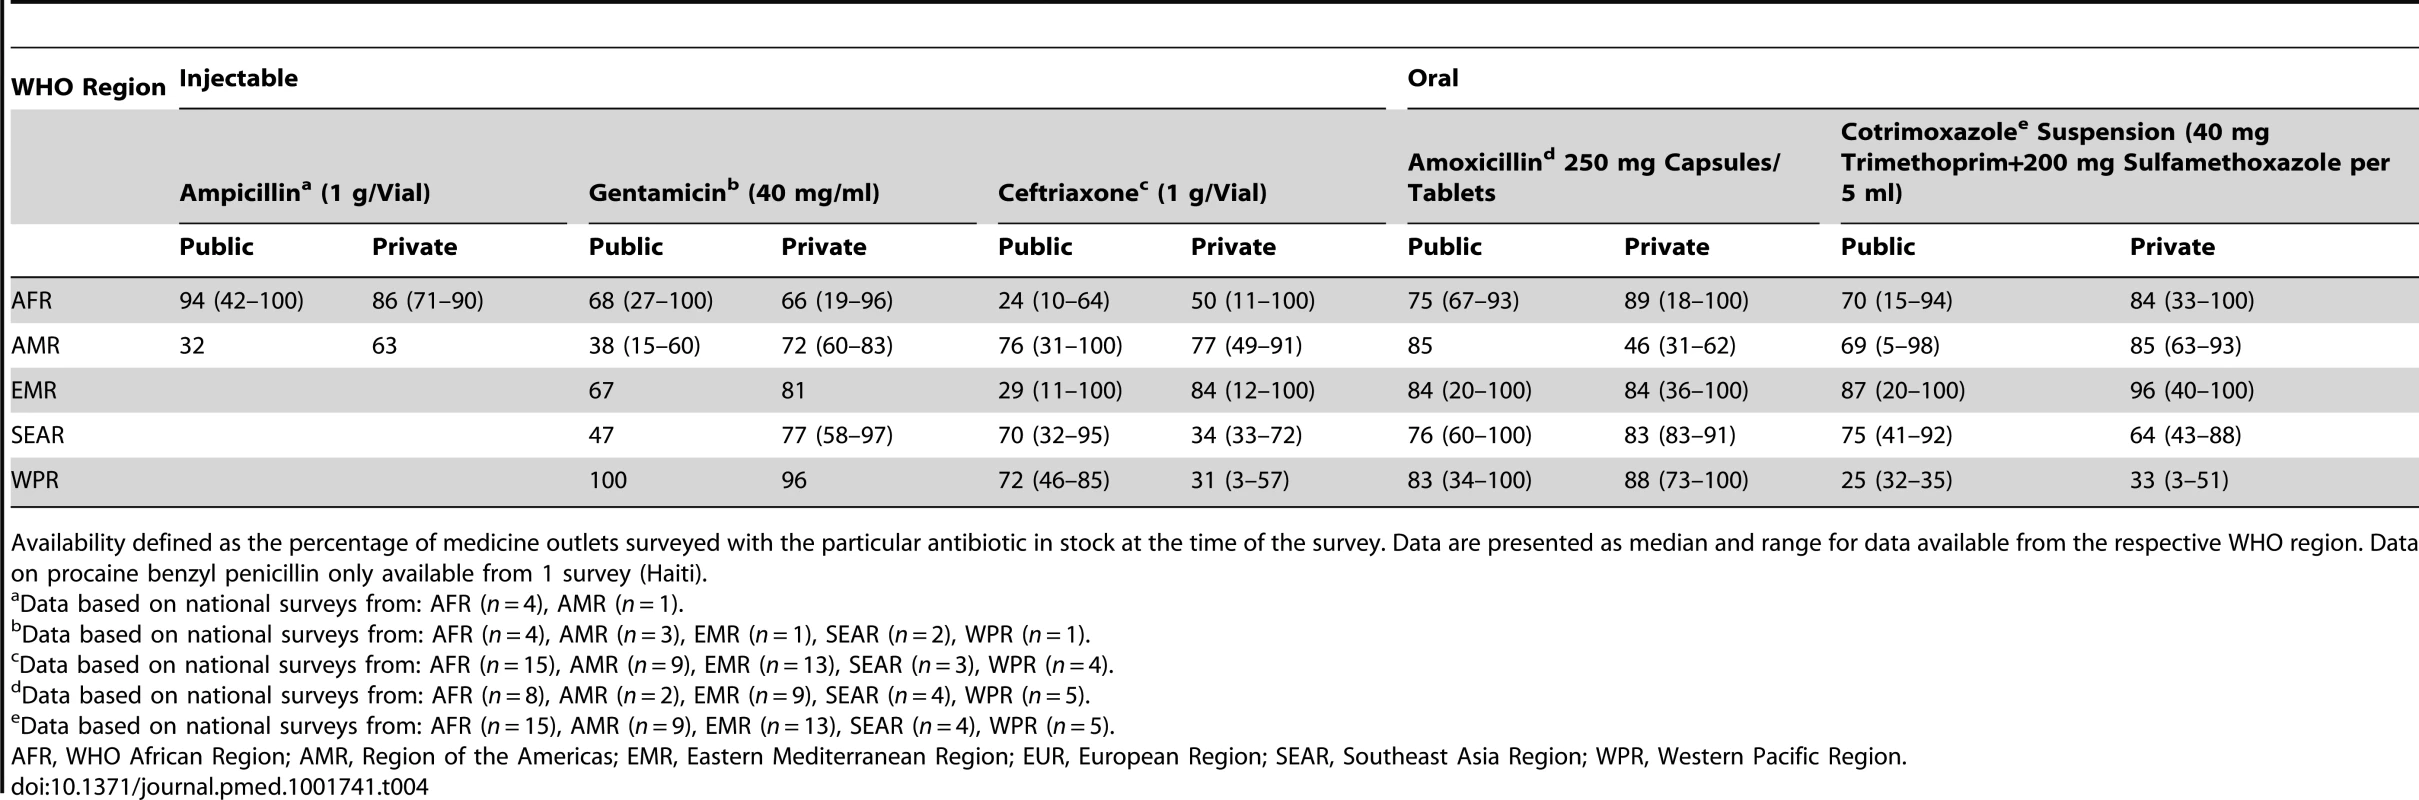 WHO/HAI data on antibiotic availability by WHO region.